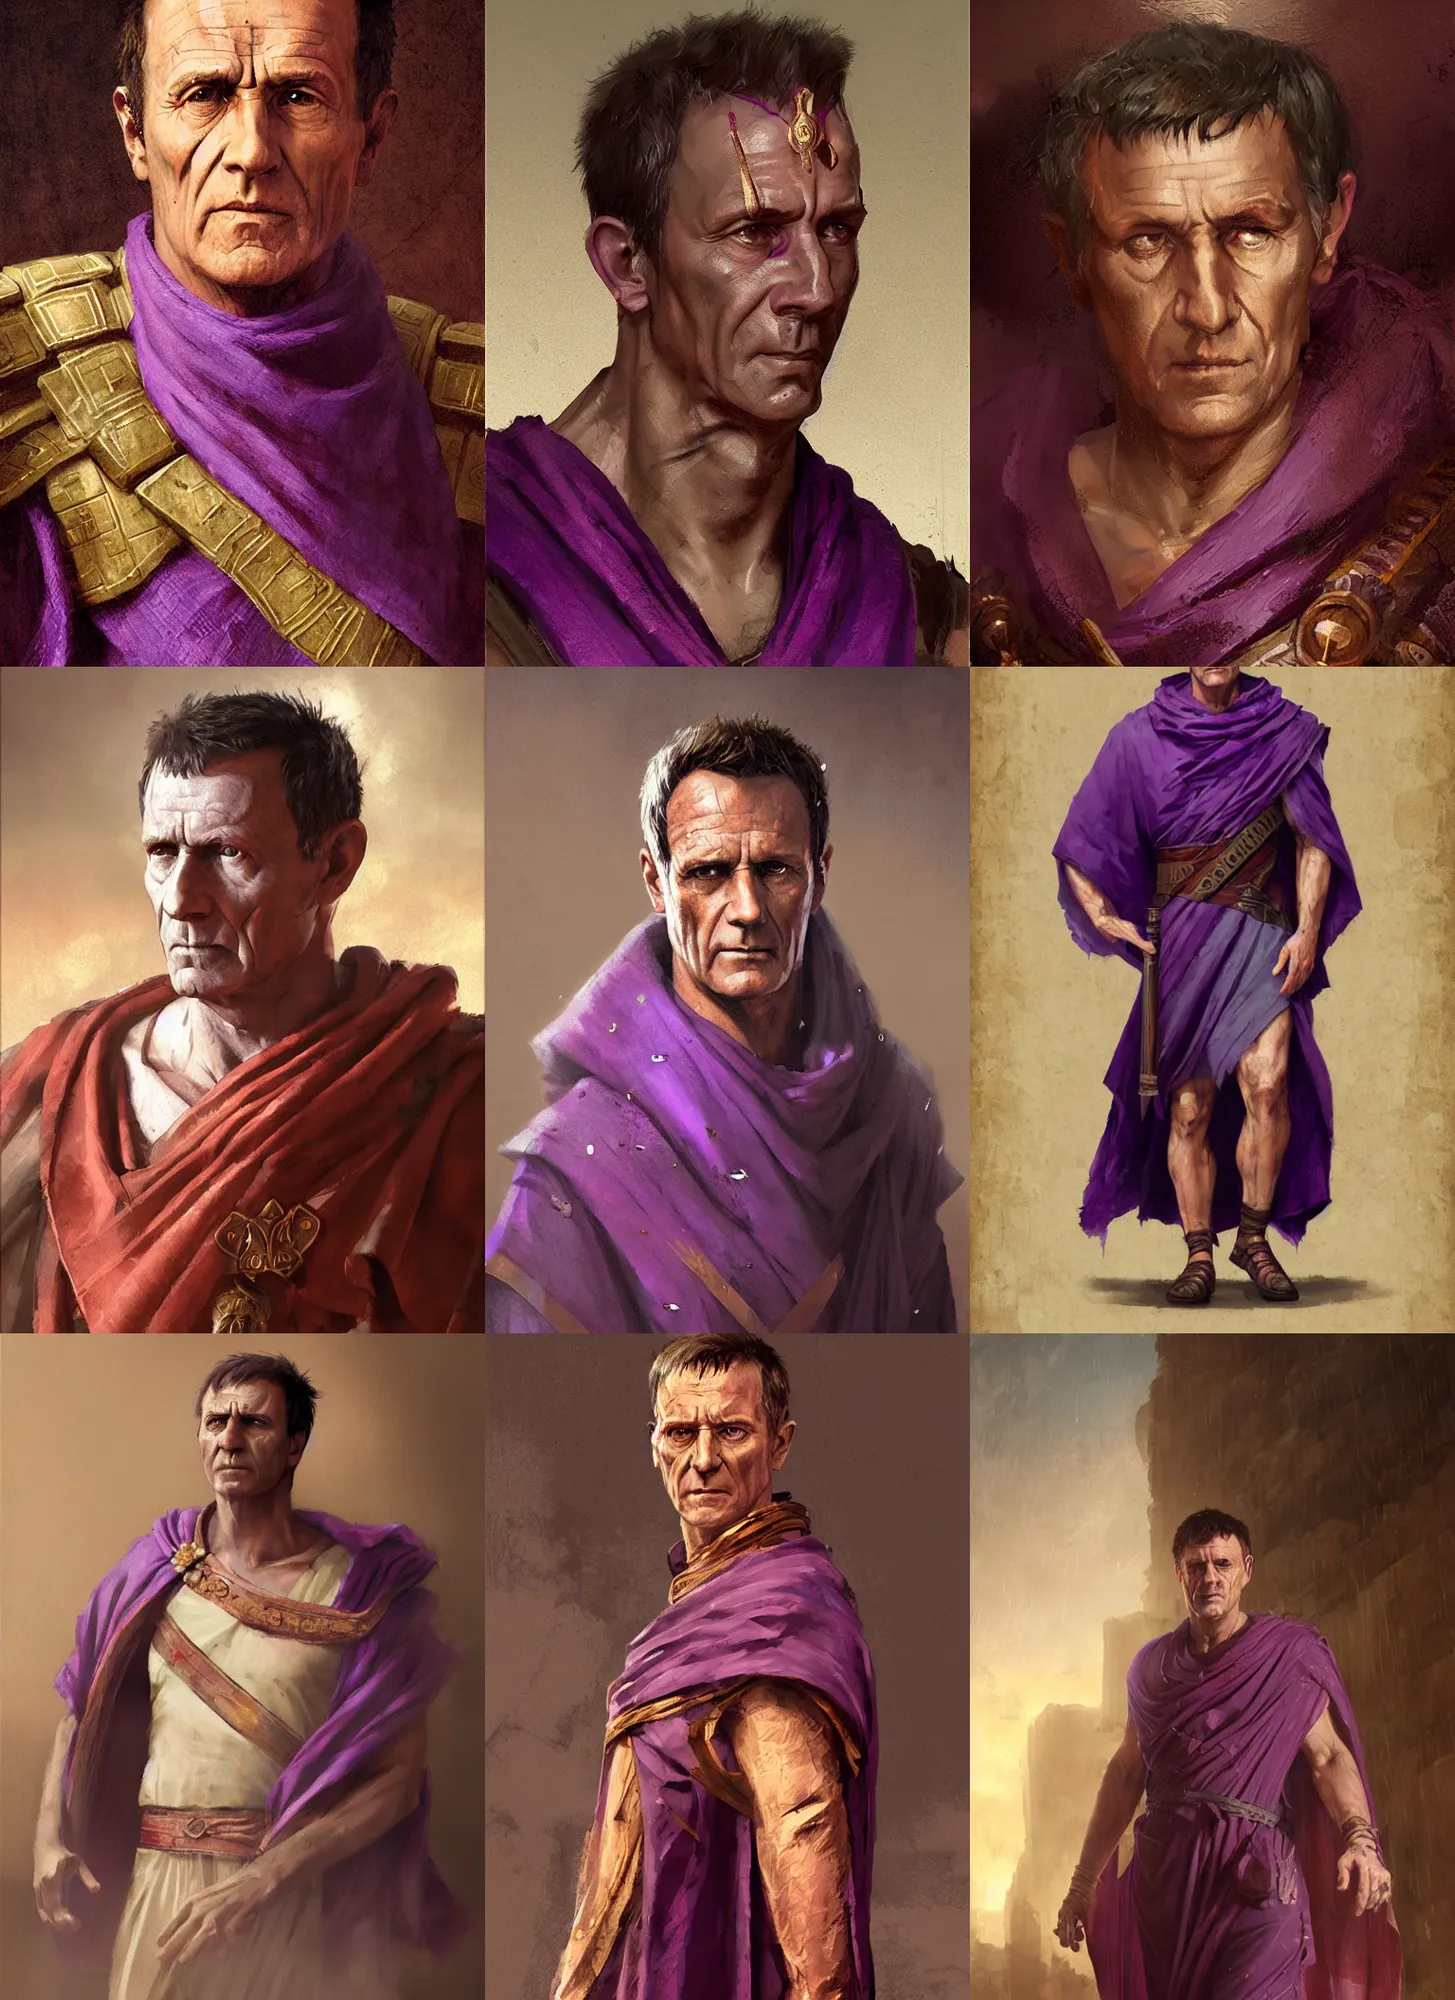 Prompt: gaius julius caesar wearing a tyrian purple roman toga, roman emperor, art by greg rutkowski, portrait, headshot, highly detailed, digital painting, sharp focus, illustration